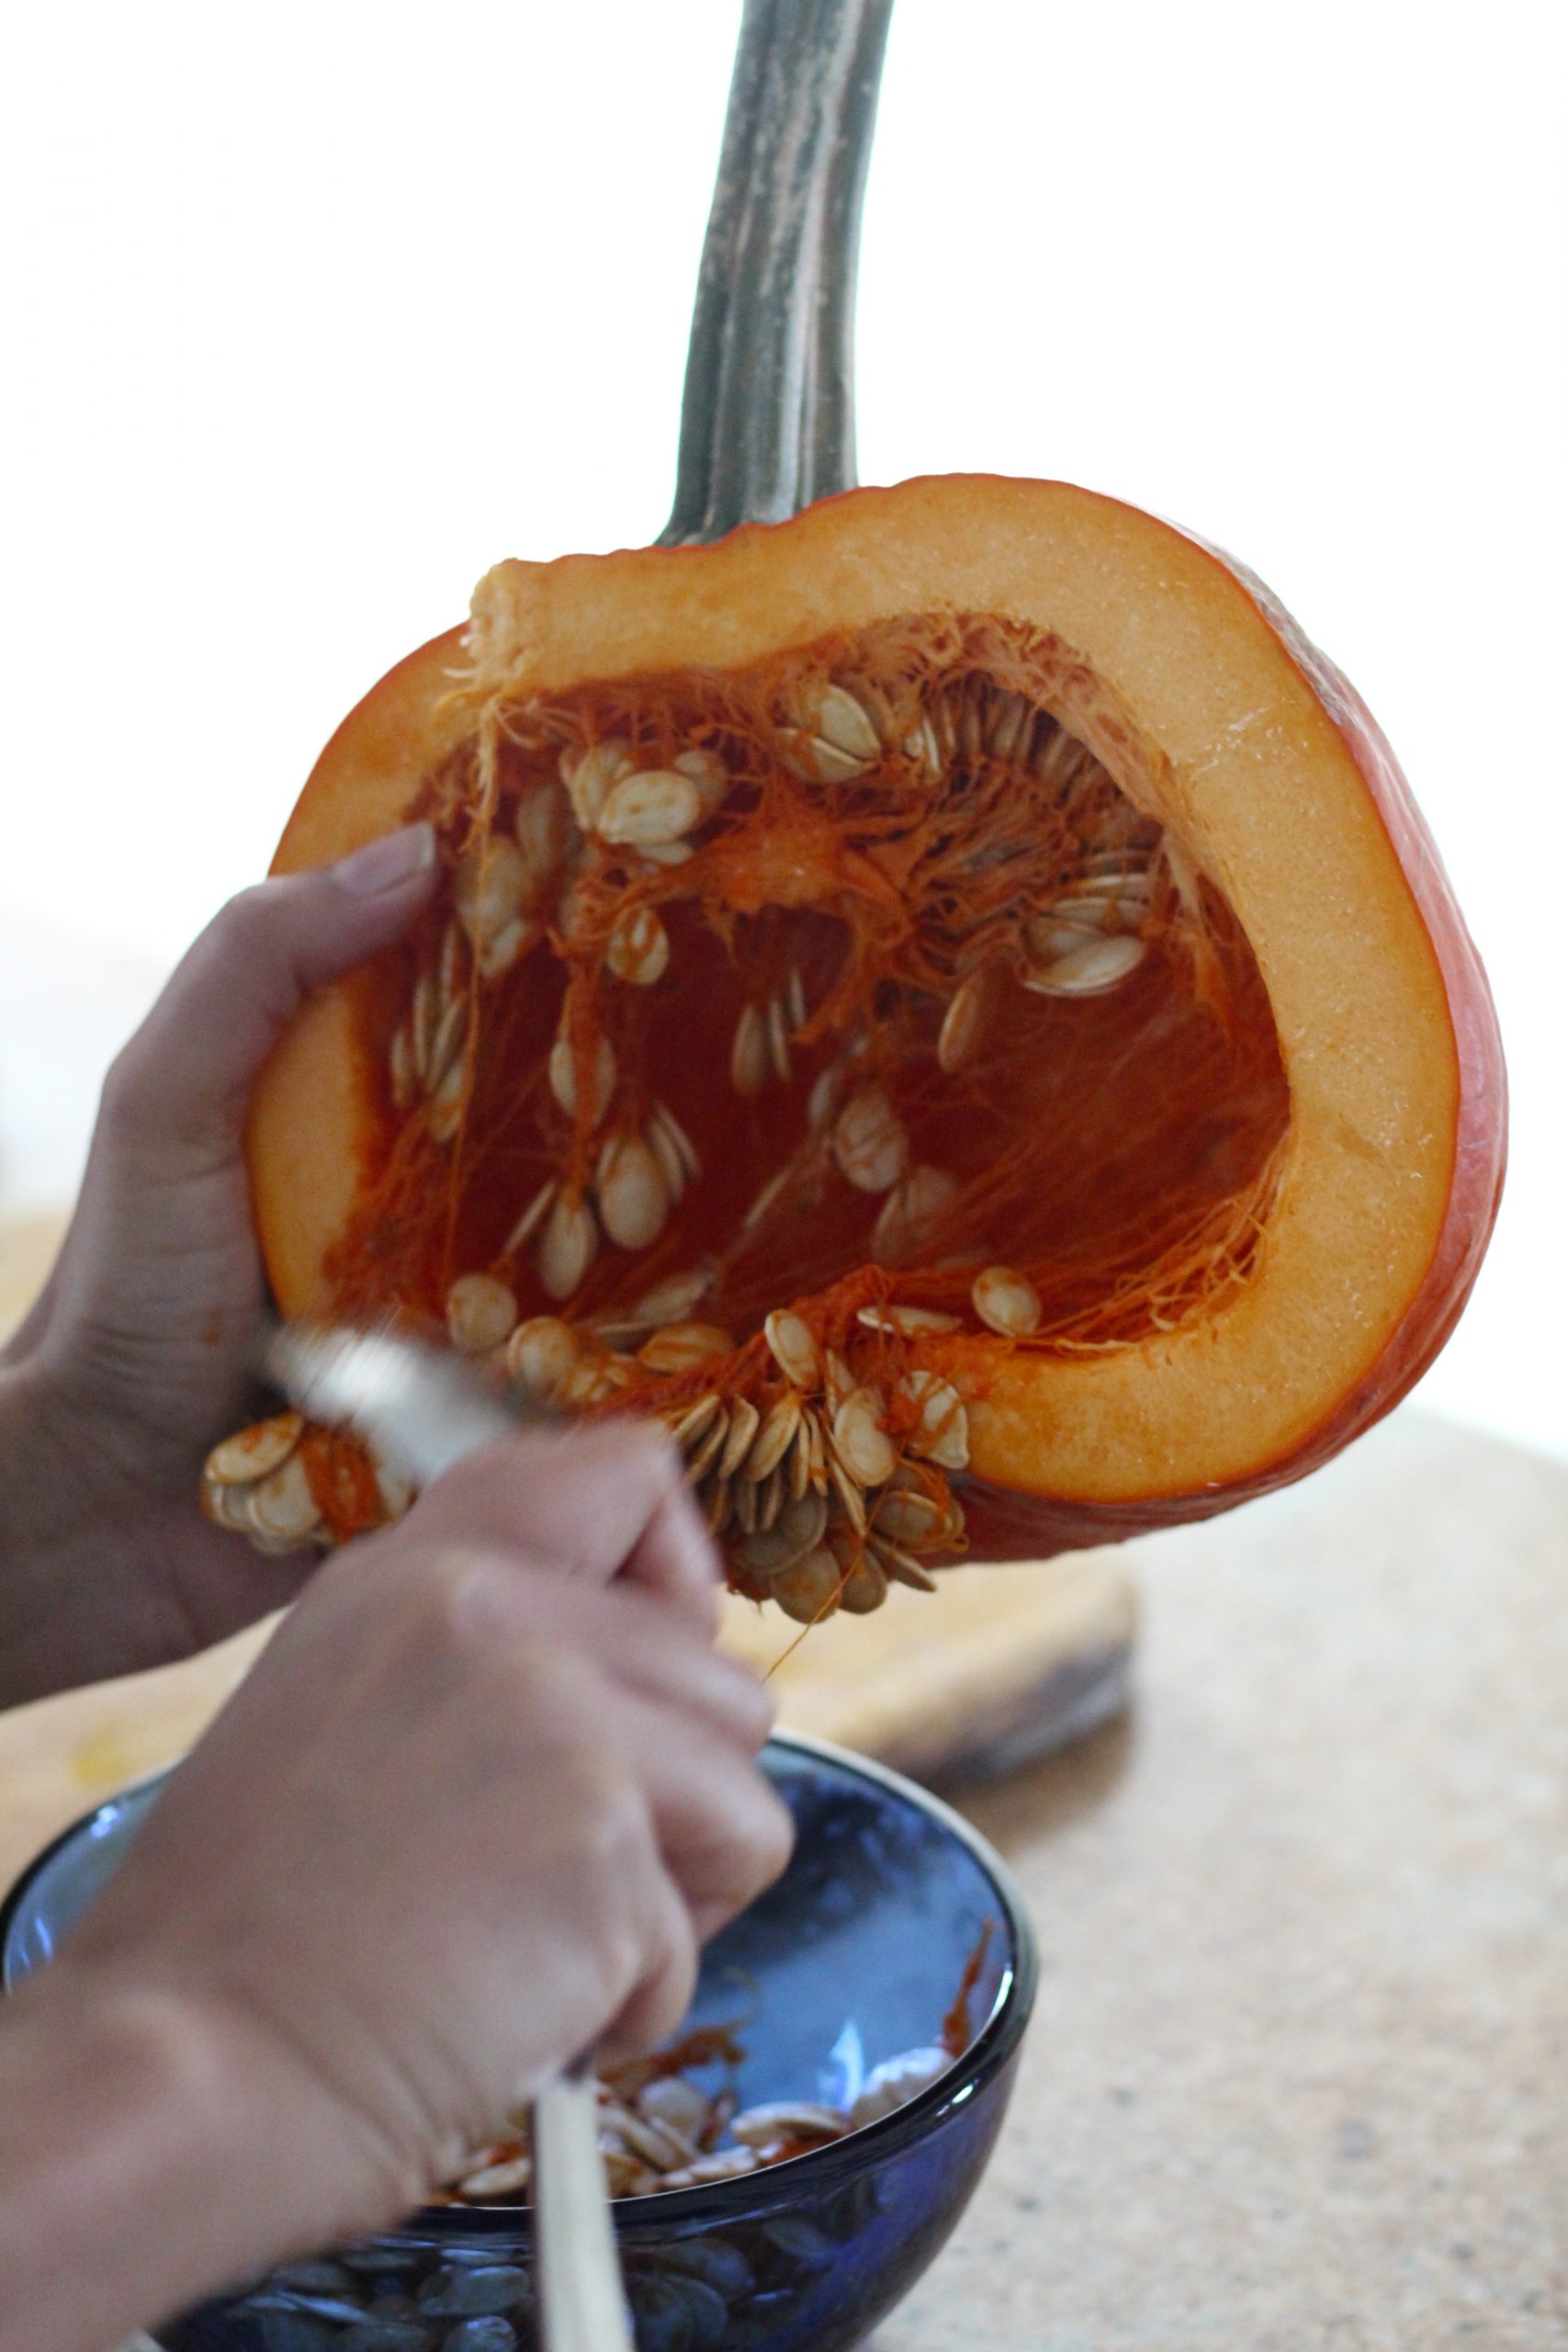 eating the whole pumpkin - seeding it 2